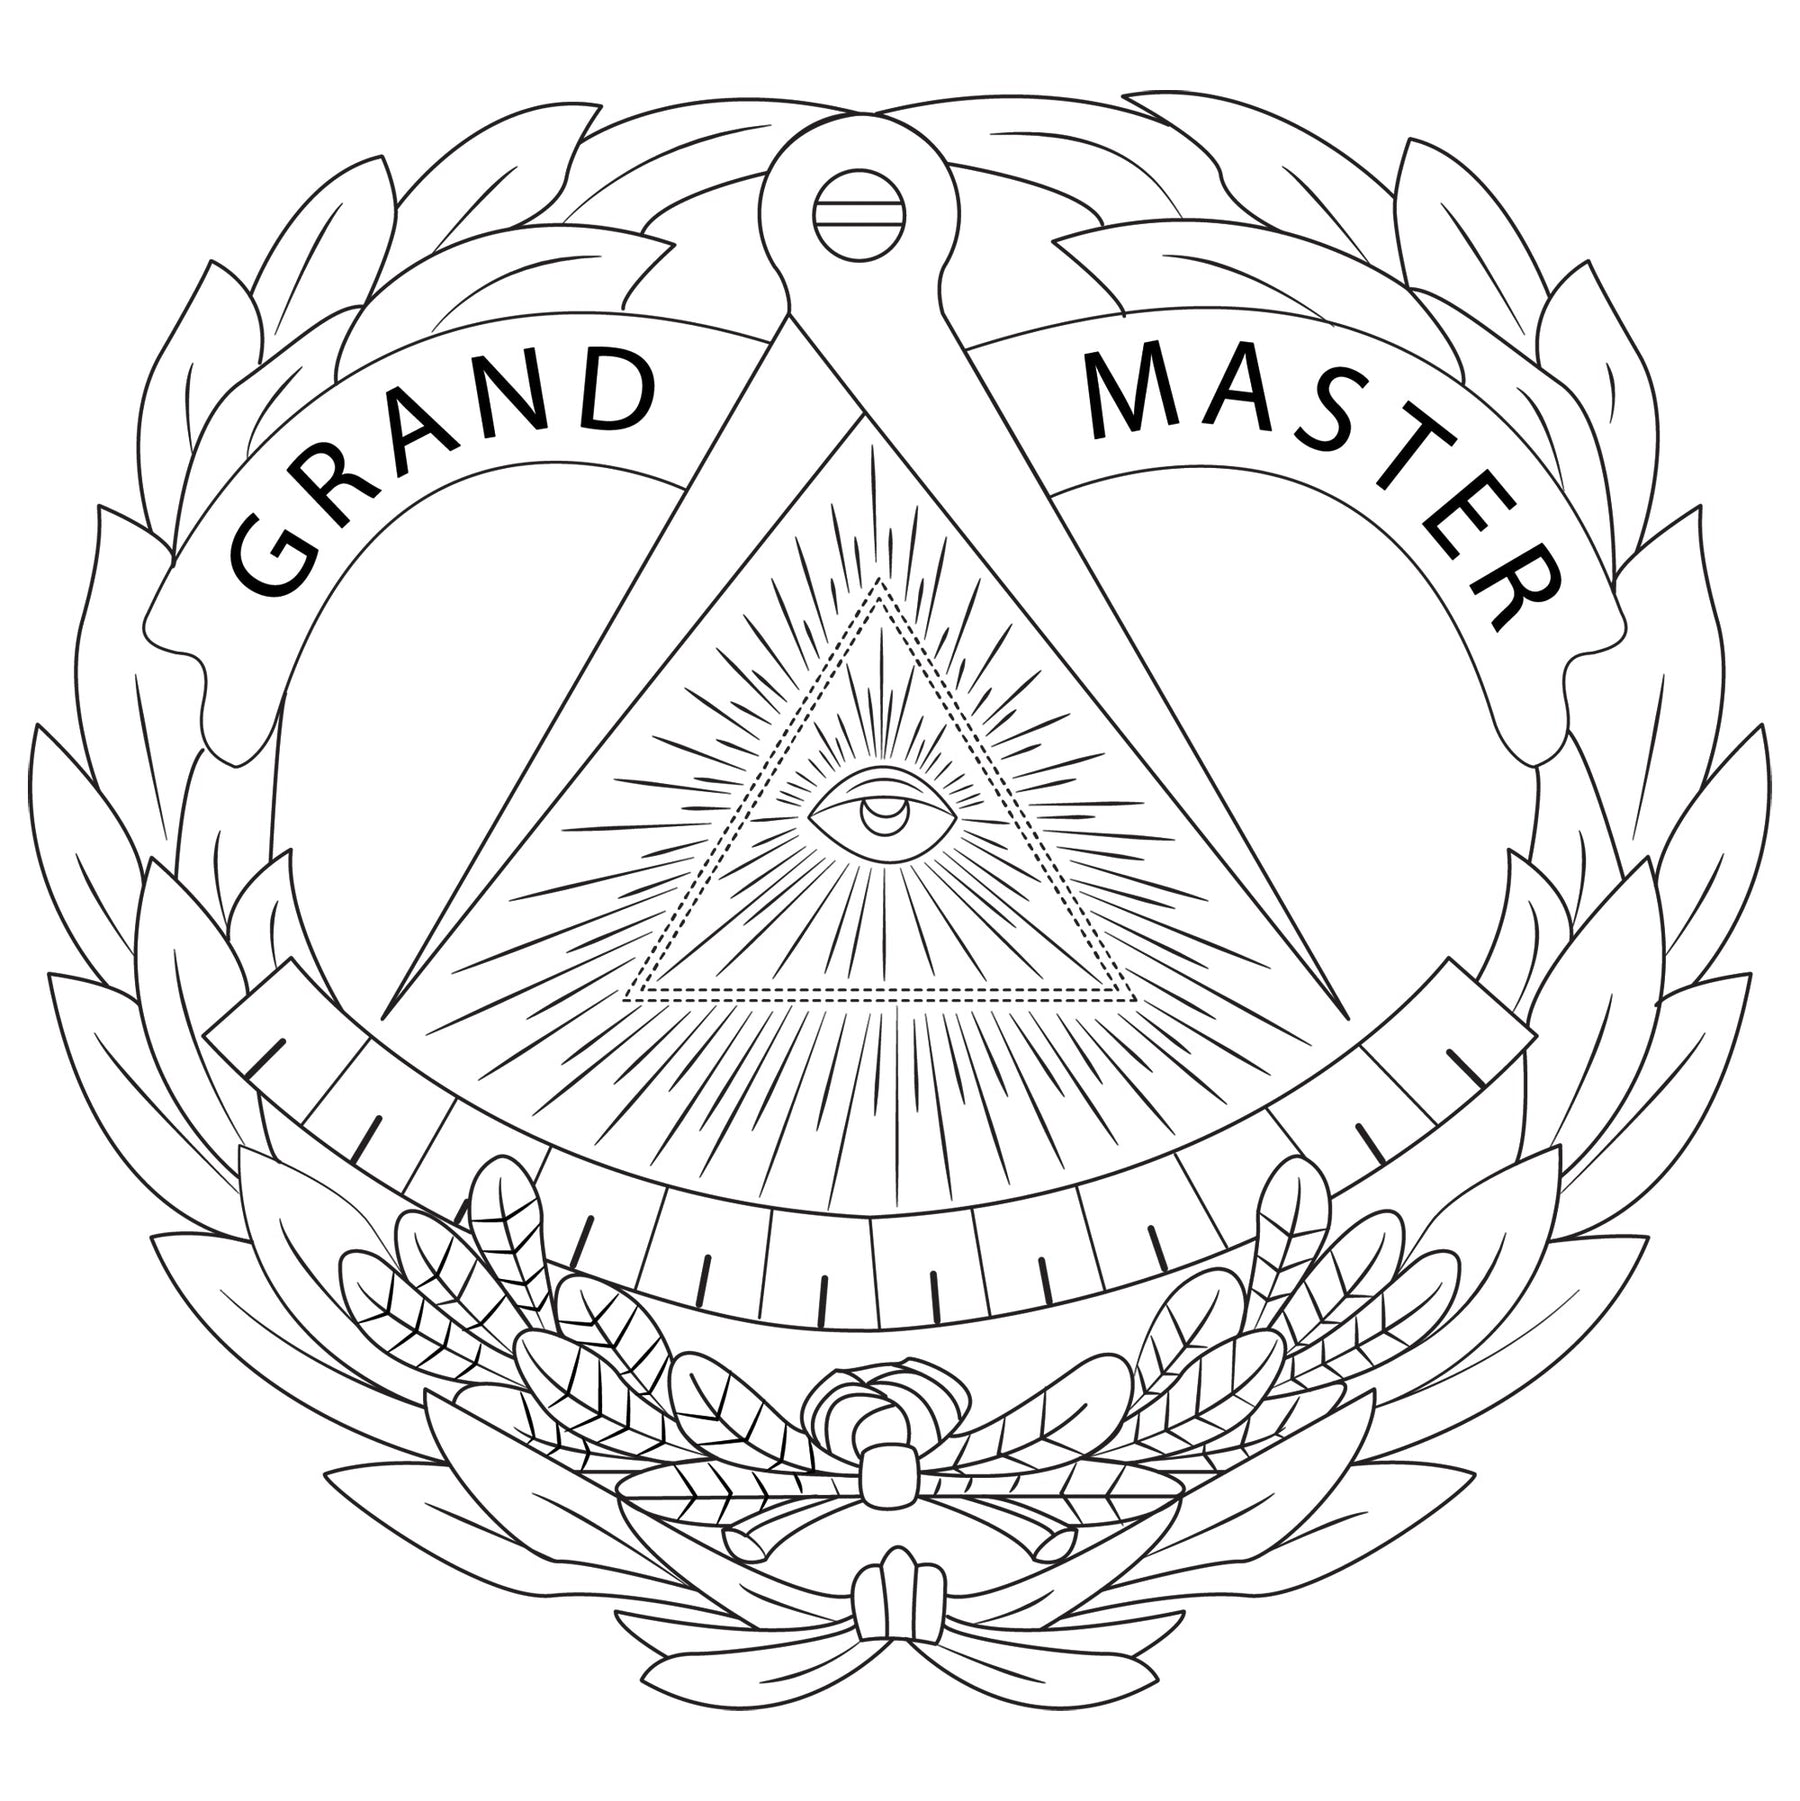 Grand Master Blue Lodge Journal - Leather - Bricks Masons